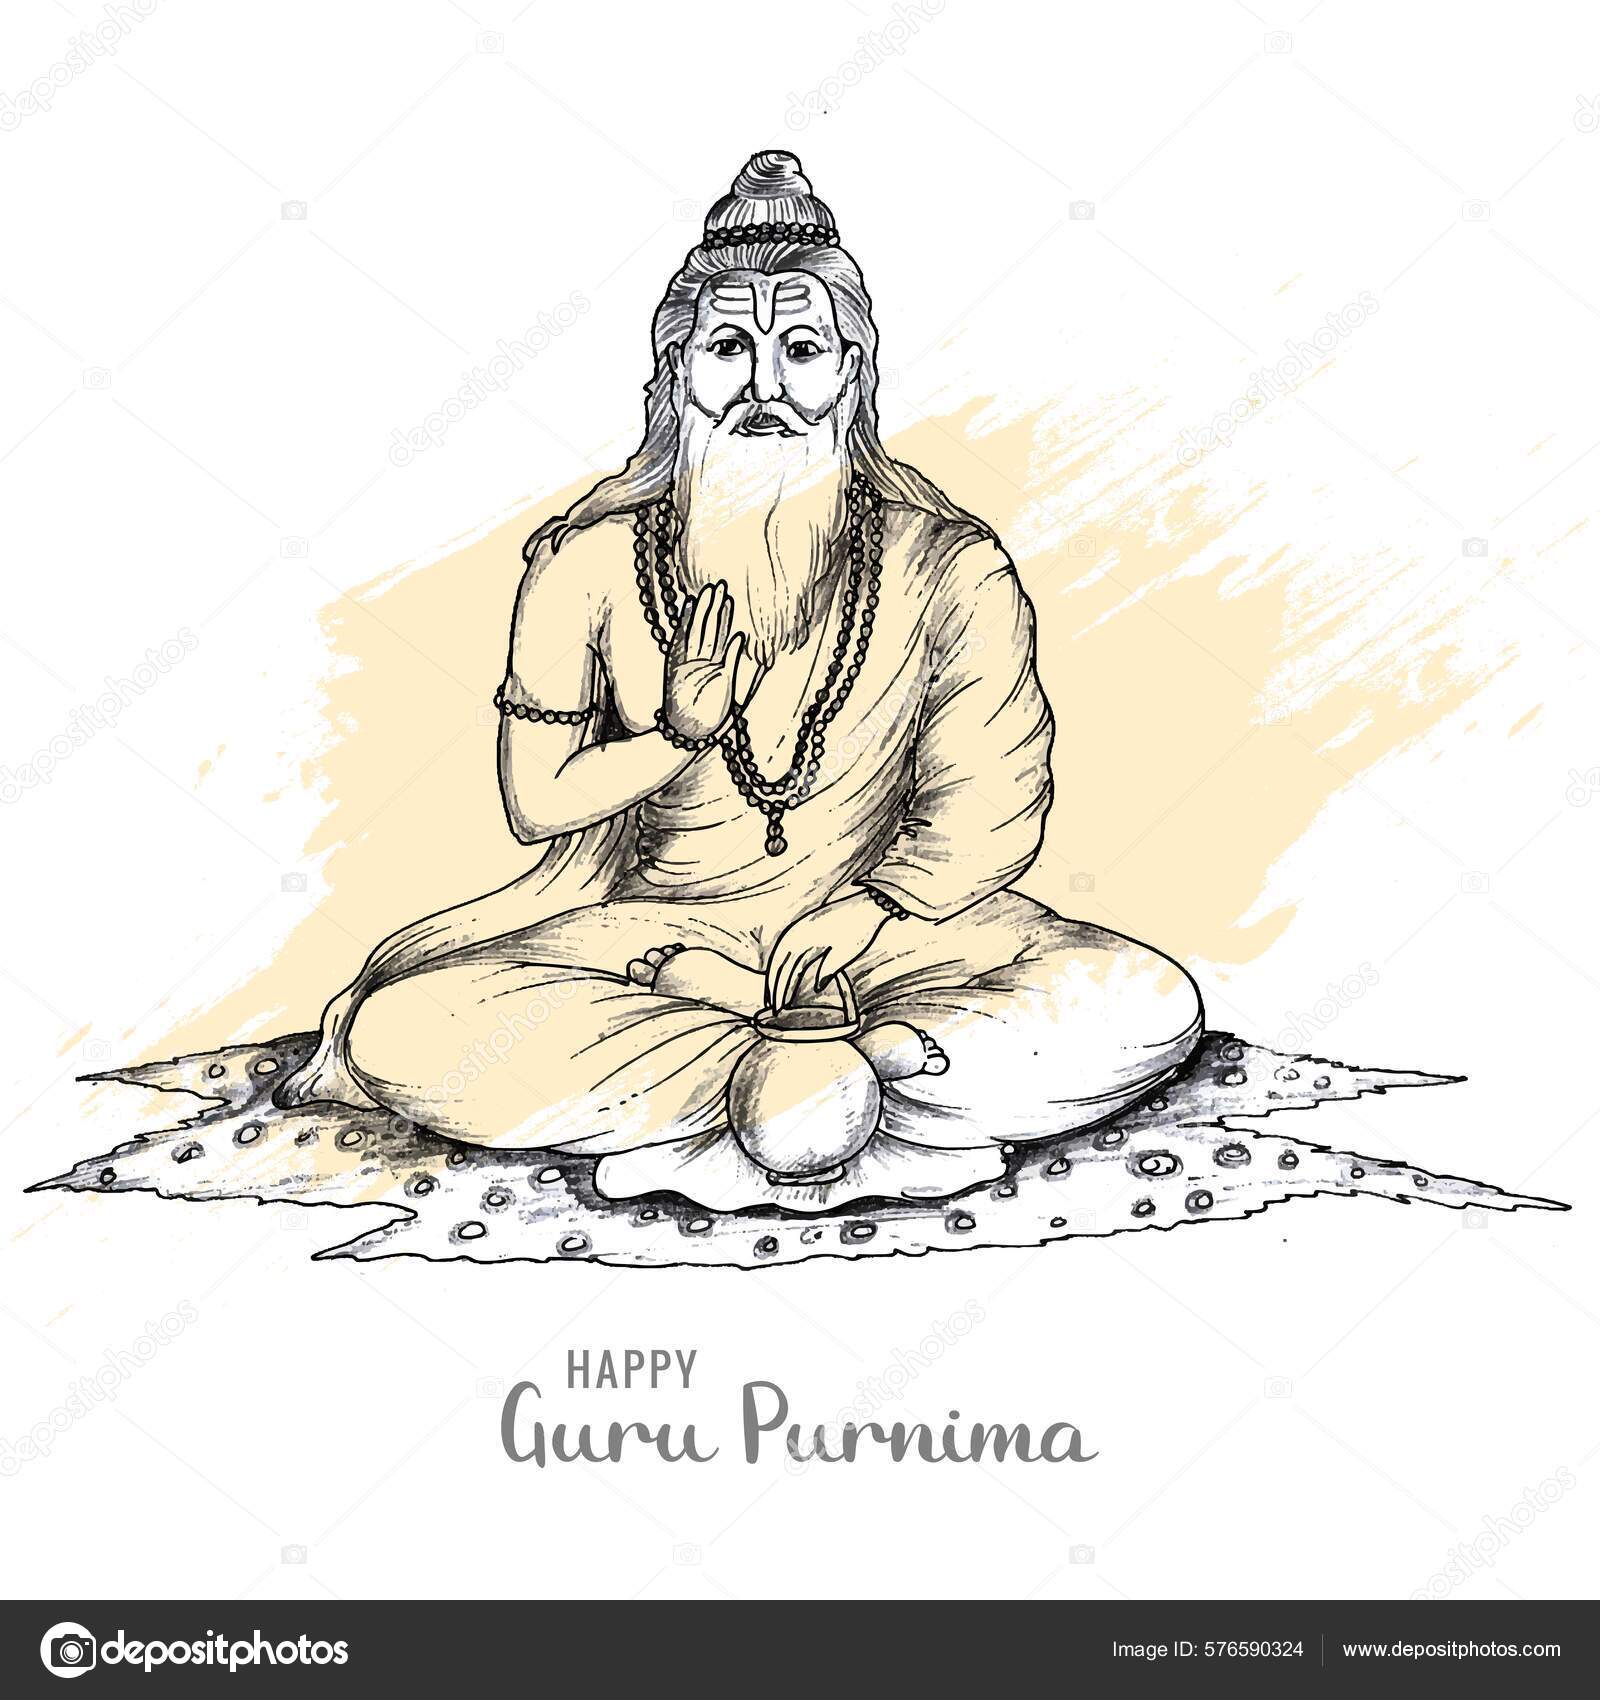 Guru Purnima Images – Browse 3,757 Stock Photos, Vectors, and Video | Adobe  Stock